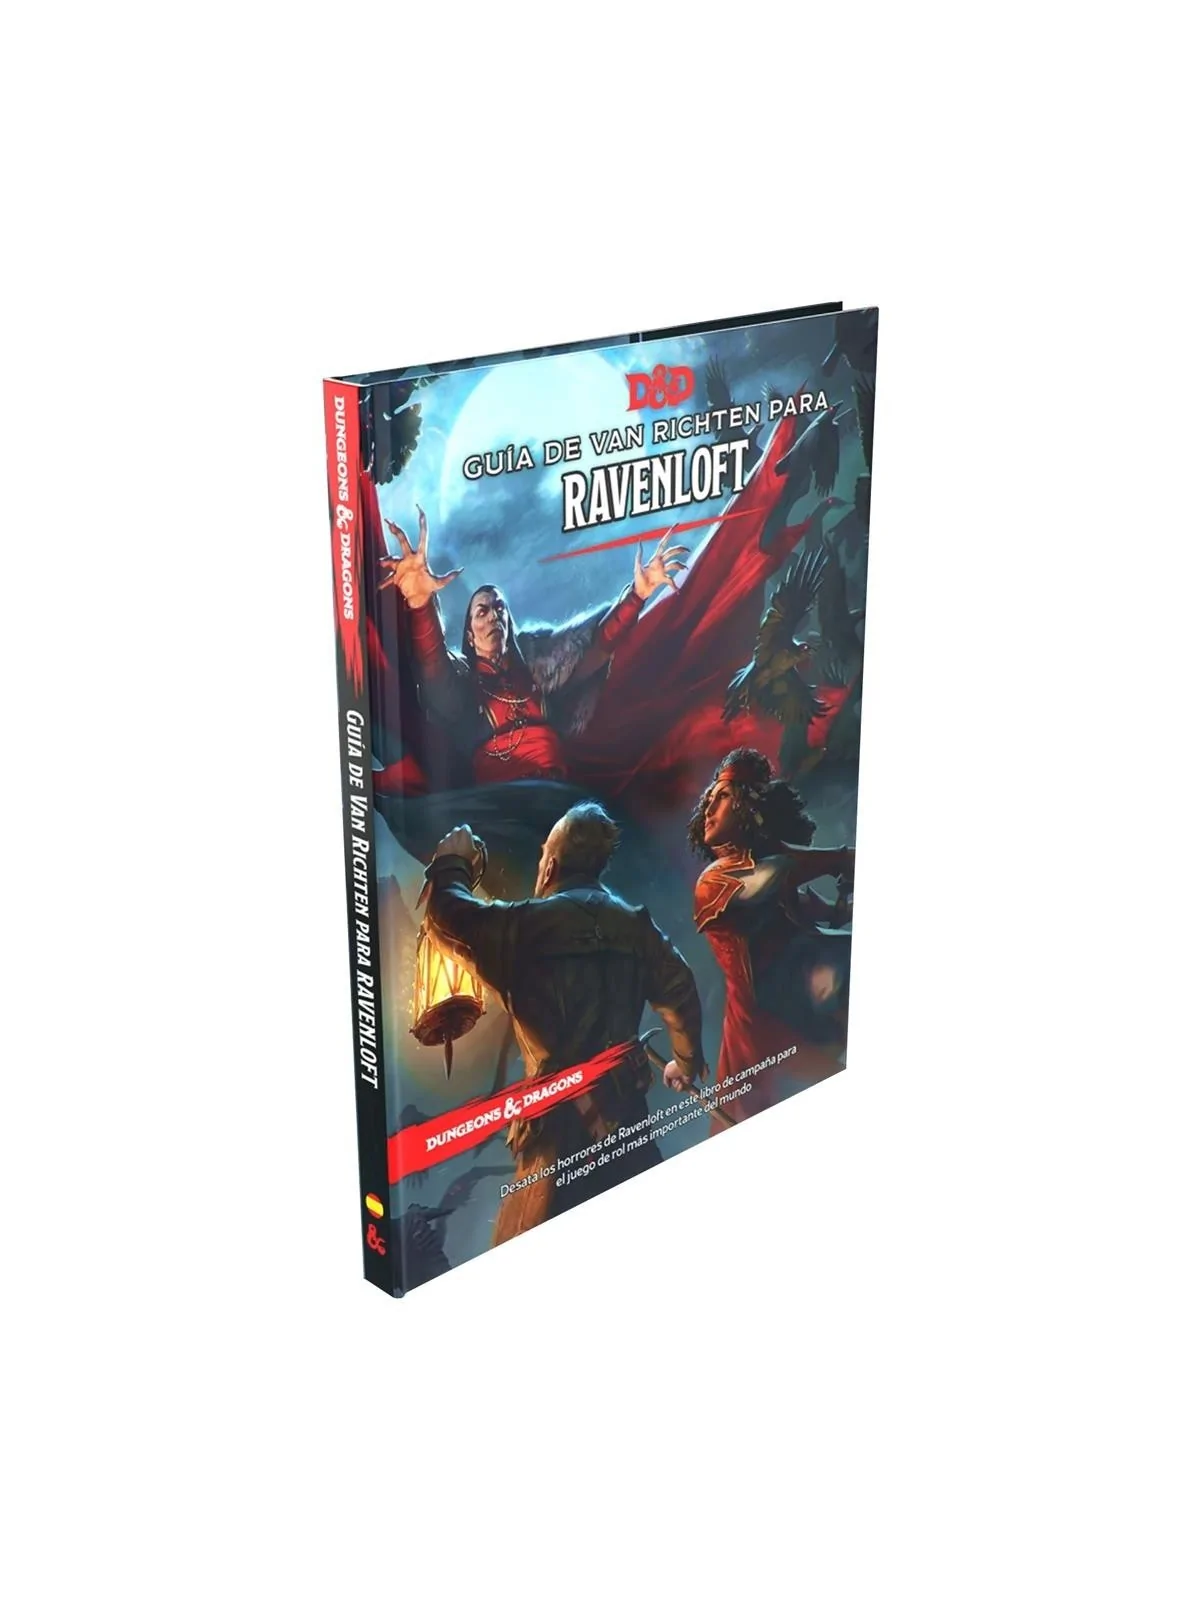 Comprar Dungeons & Dragons: Guía de Van Richten para Ravenloft barato 